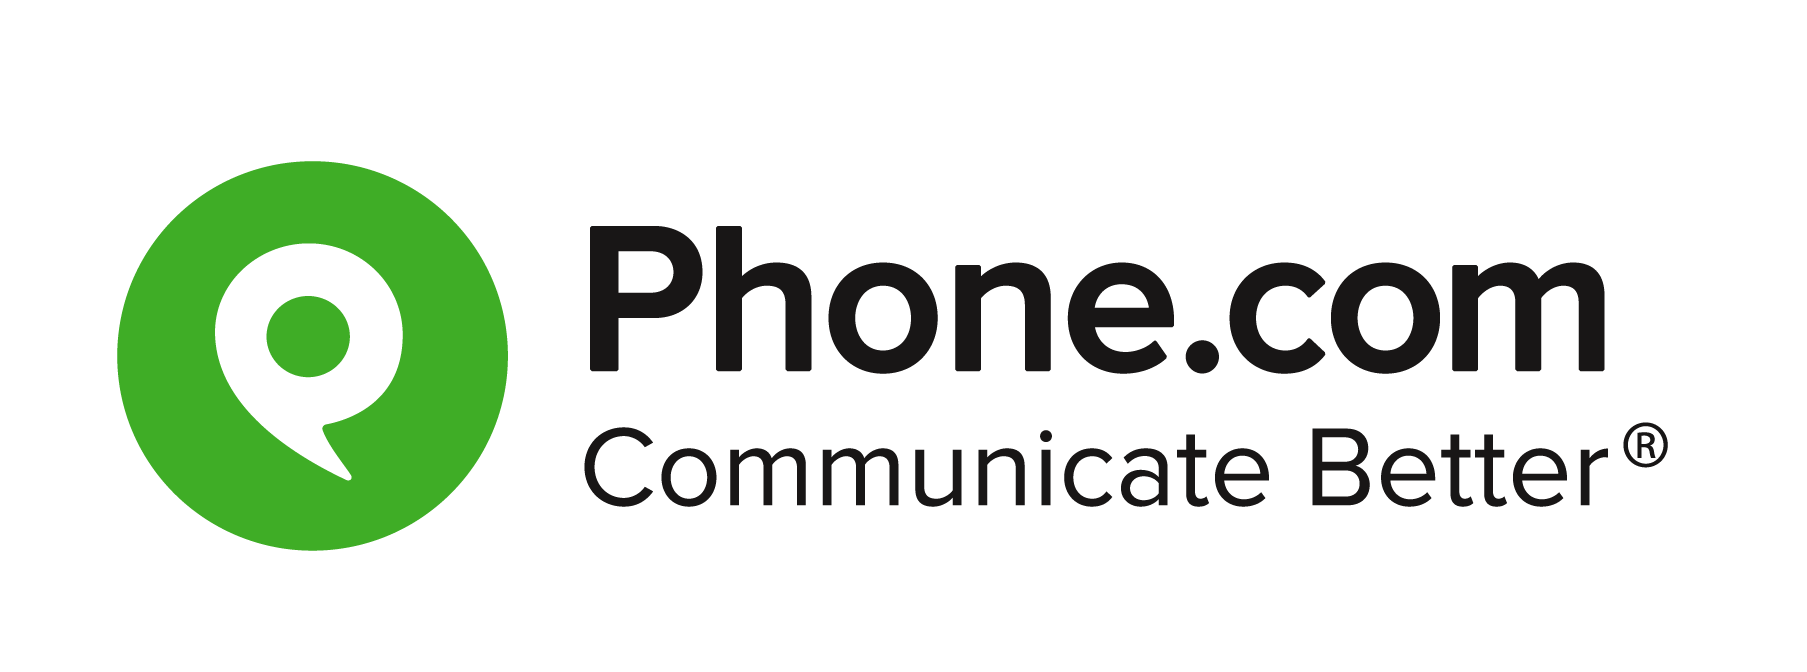 Keep.com Logo - VOIP Business Phone Service & Business Phone Systems | Phone.com